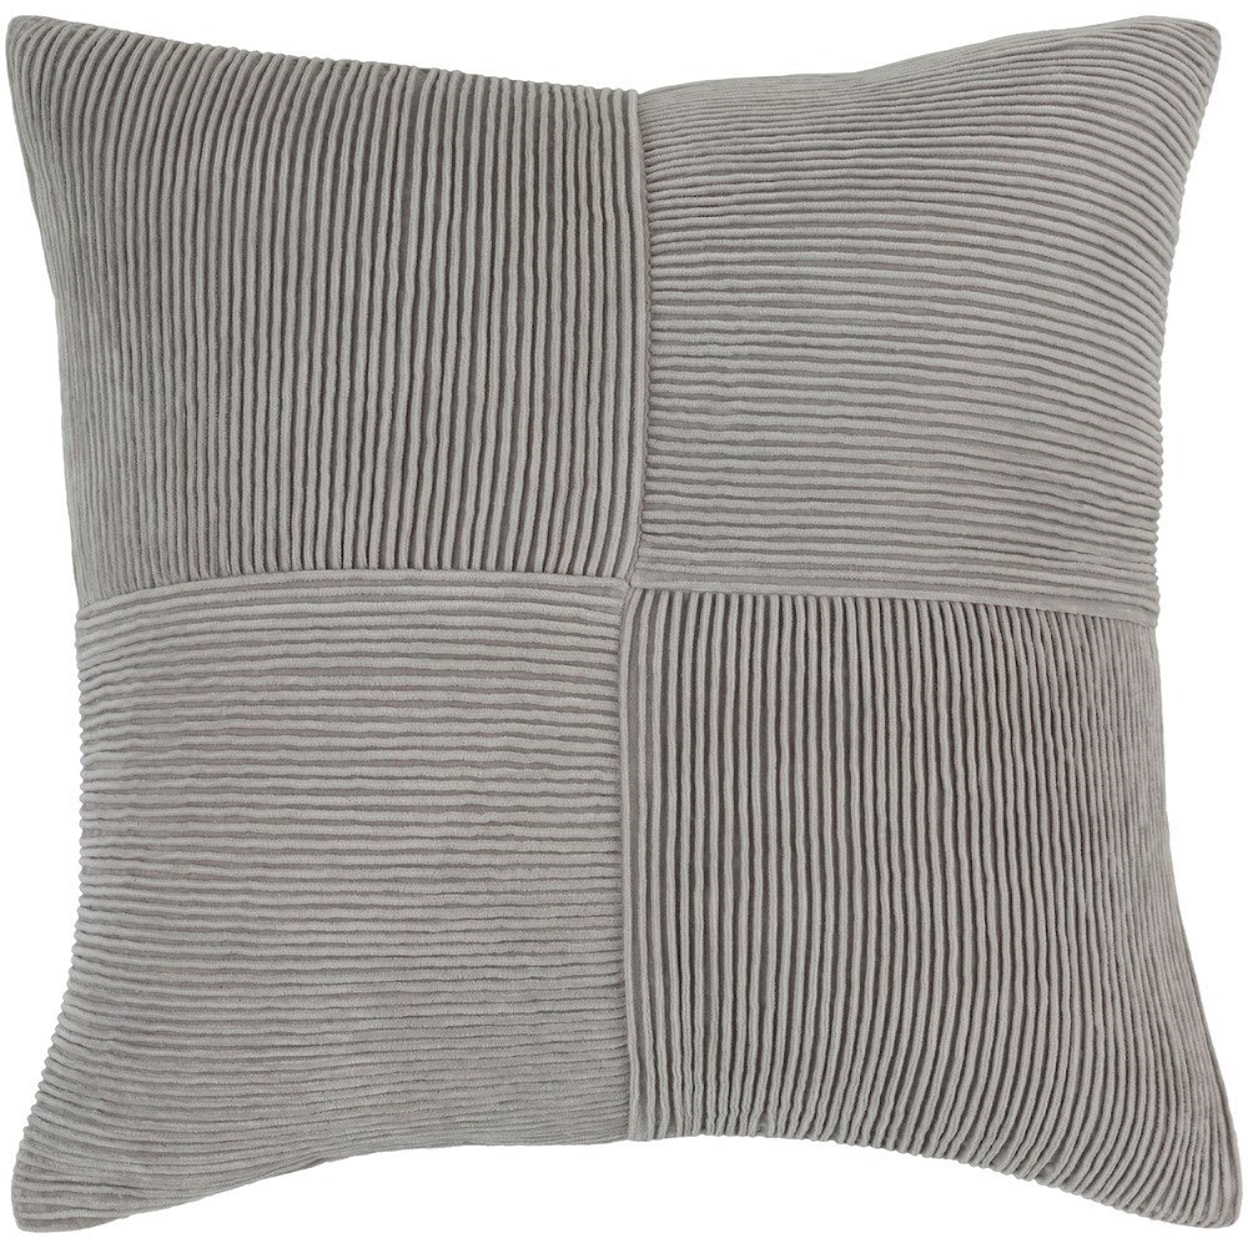 Surya Conrad 20 x 20 x 4 Polyester Throw Pillow